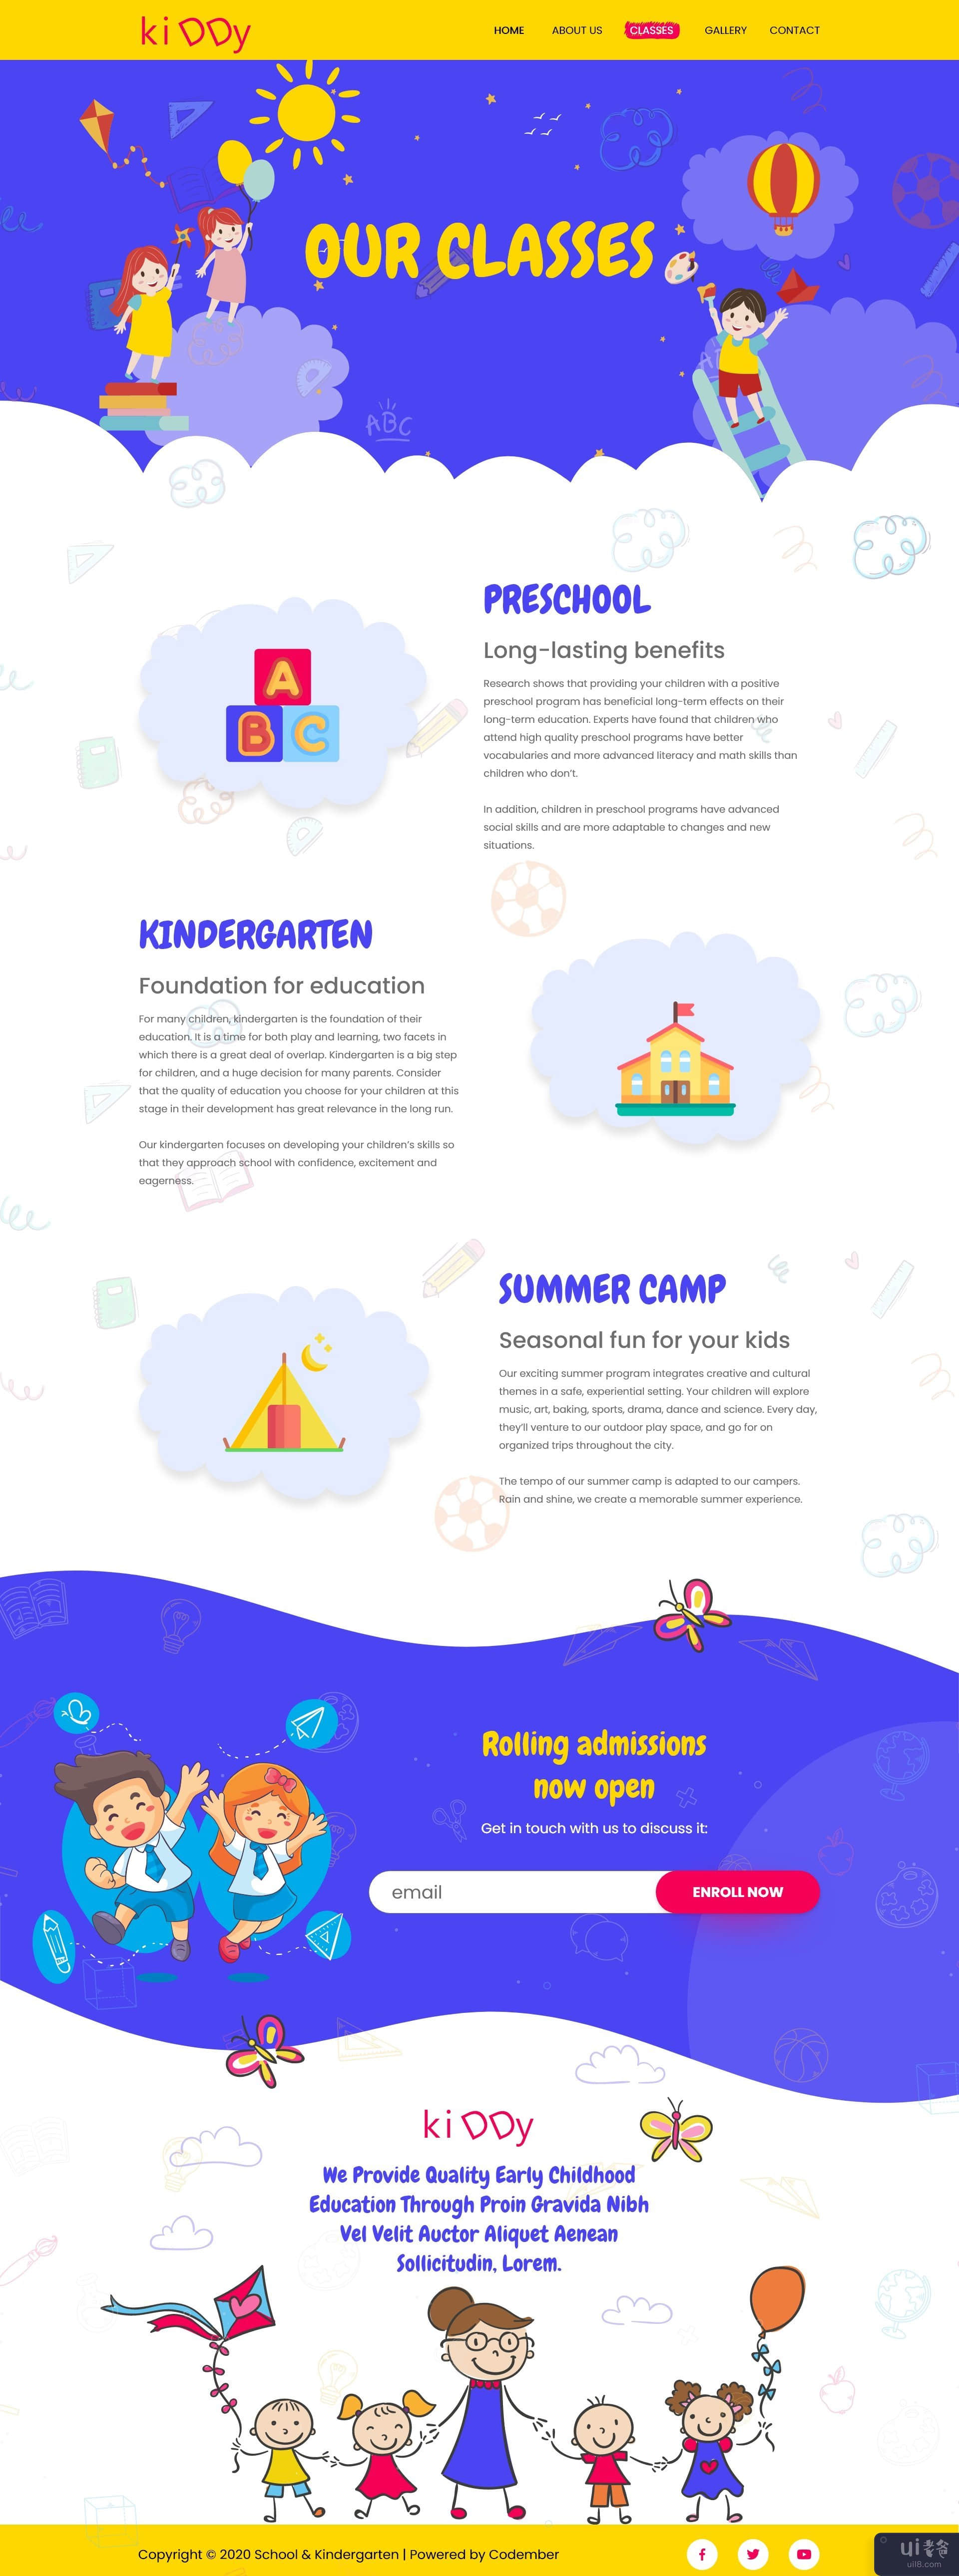 Kiddy-幼儿园网页界面设计(Kiddy-kindergarten Web UI Design)插图1